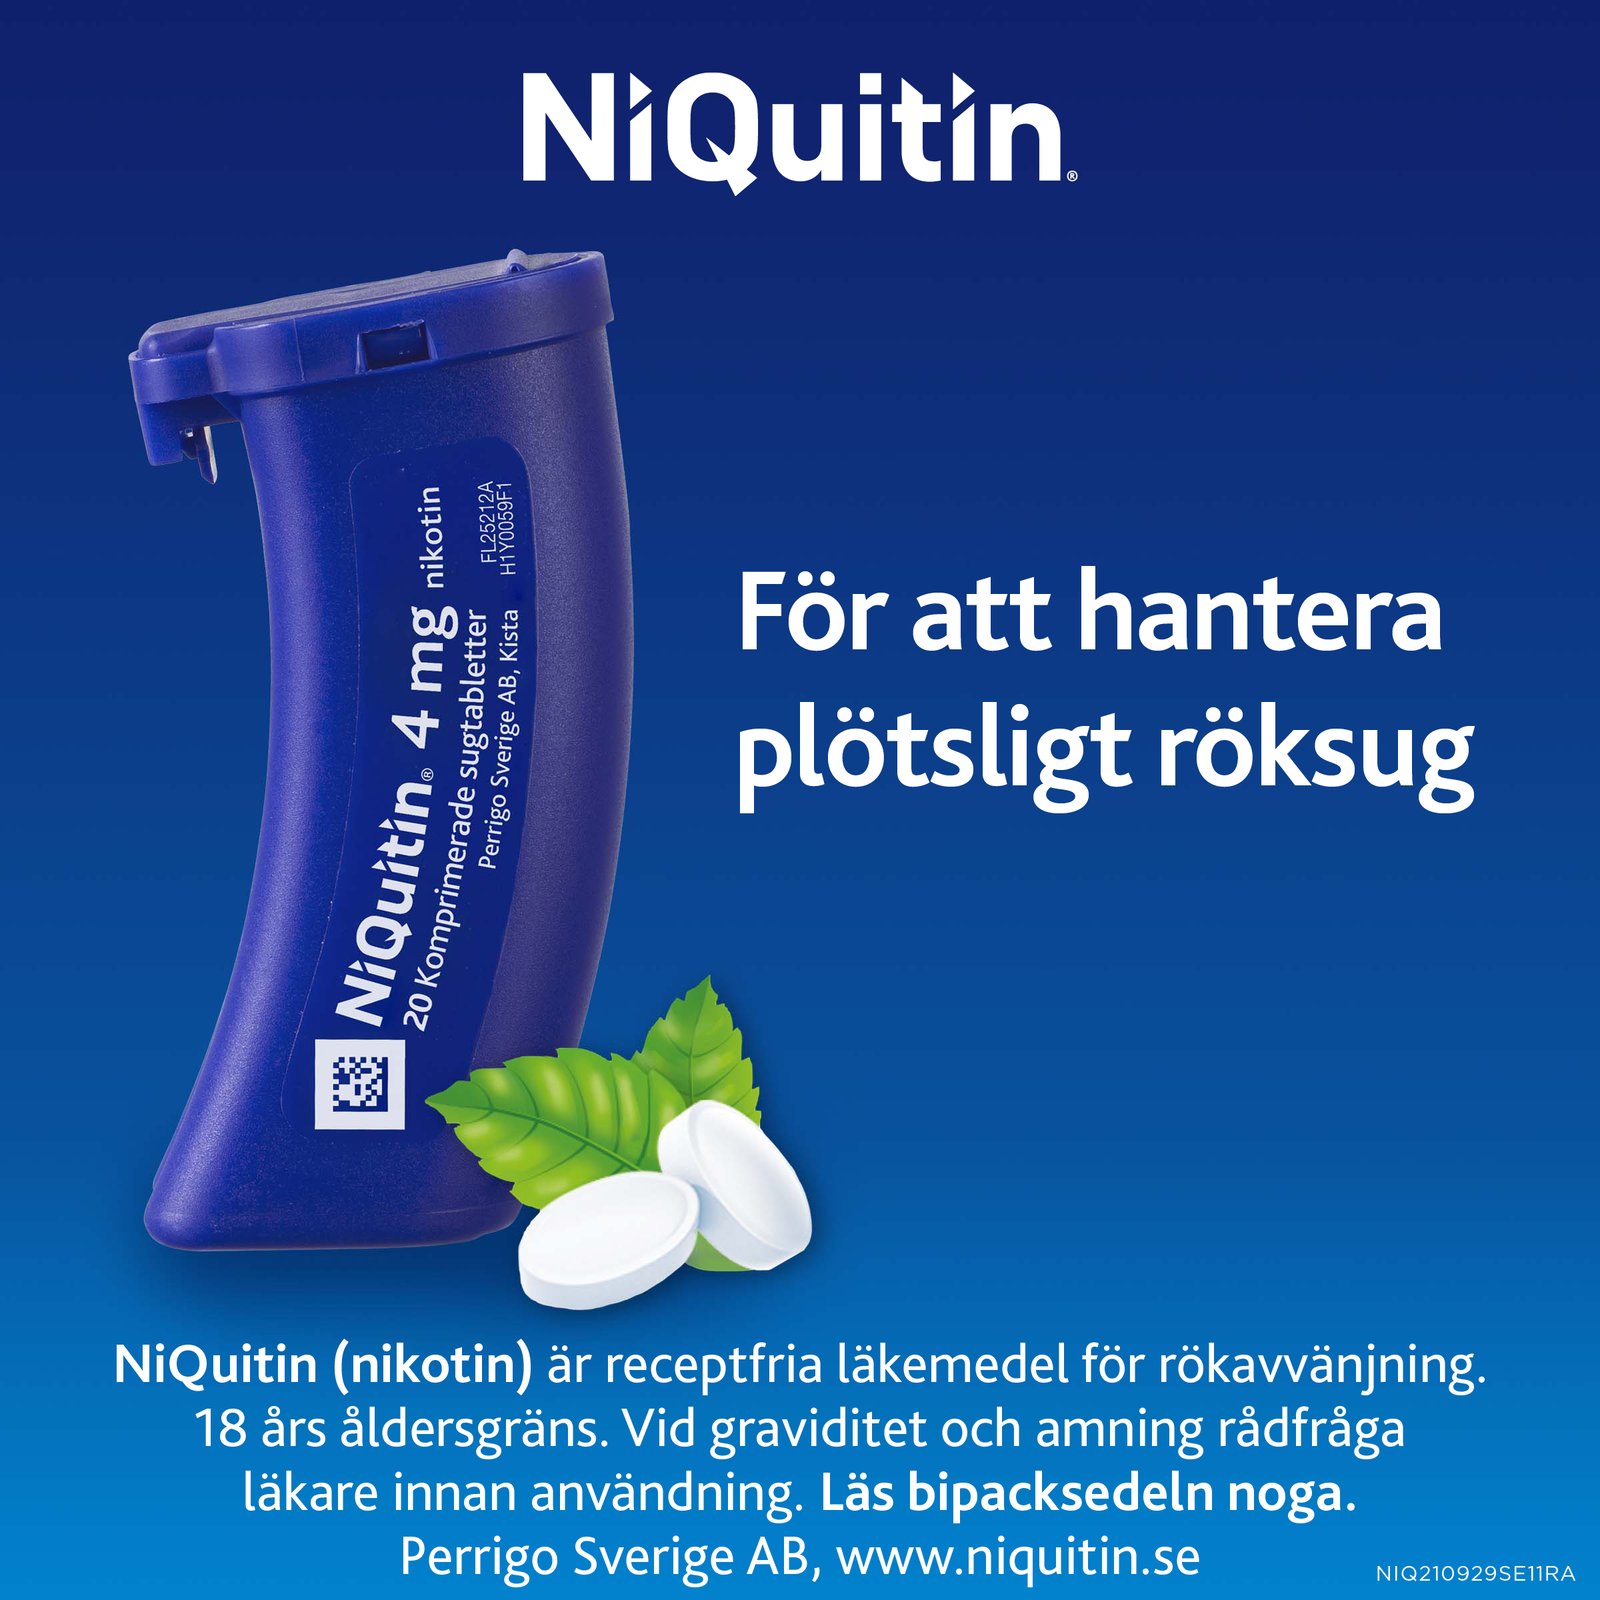 NiQuitin Mint 4 mg Komprimerad Sugtablett 60 St